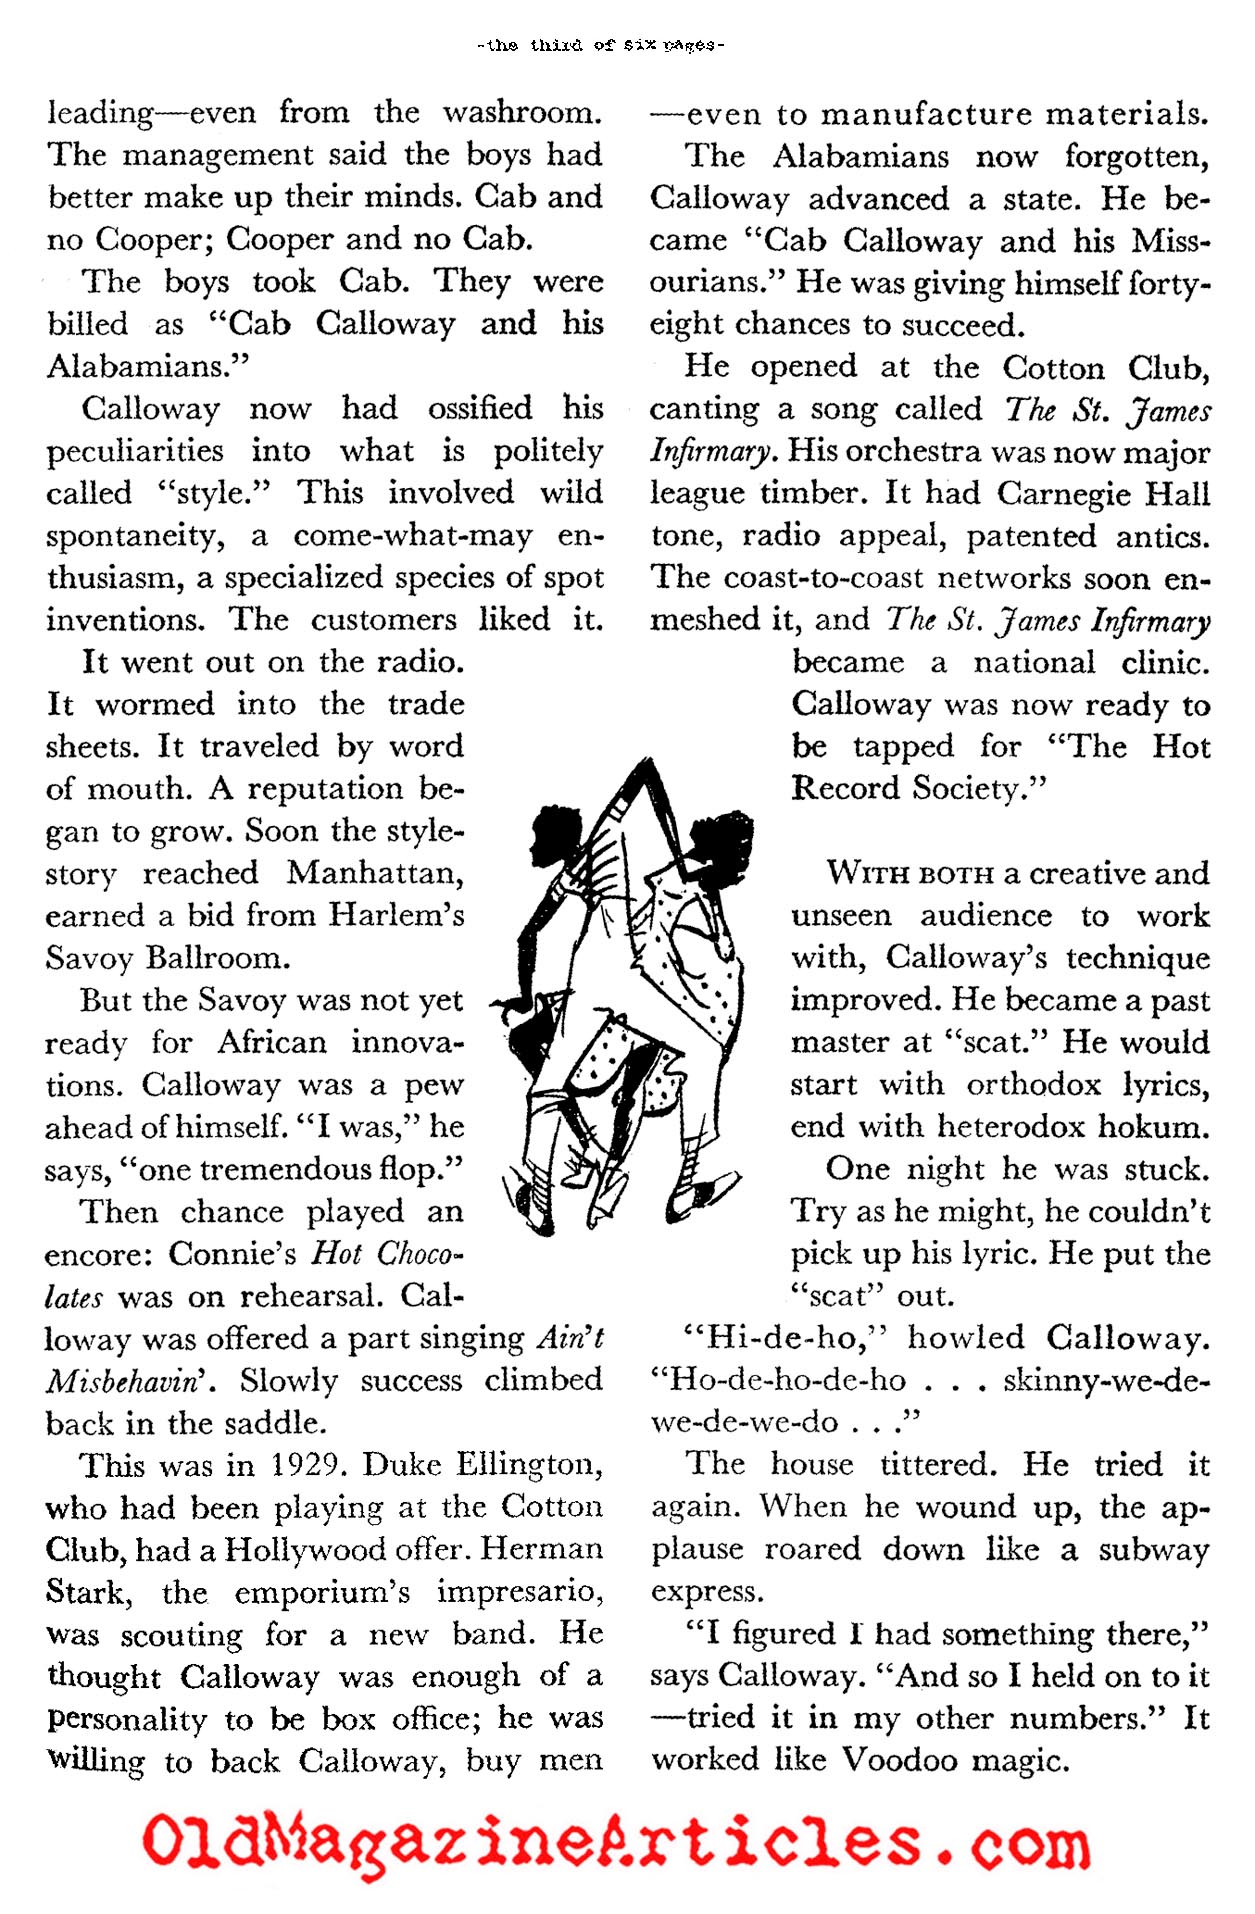 Big Bandleader Cab Calloway (Coronet Magazine, 1941)